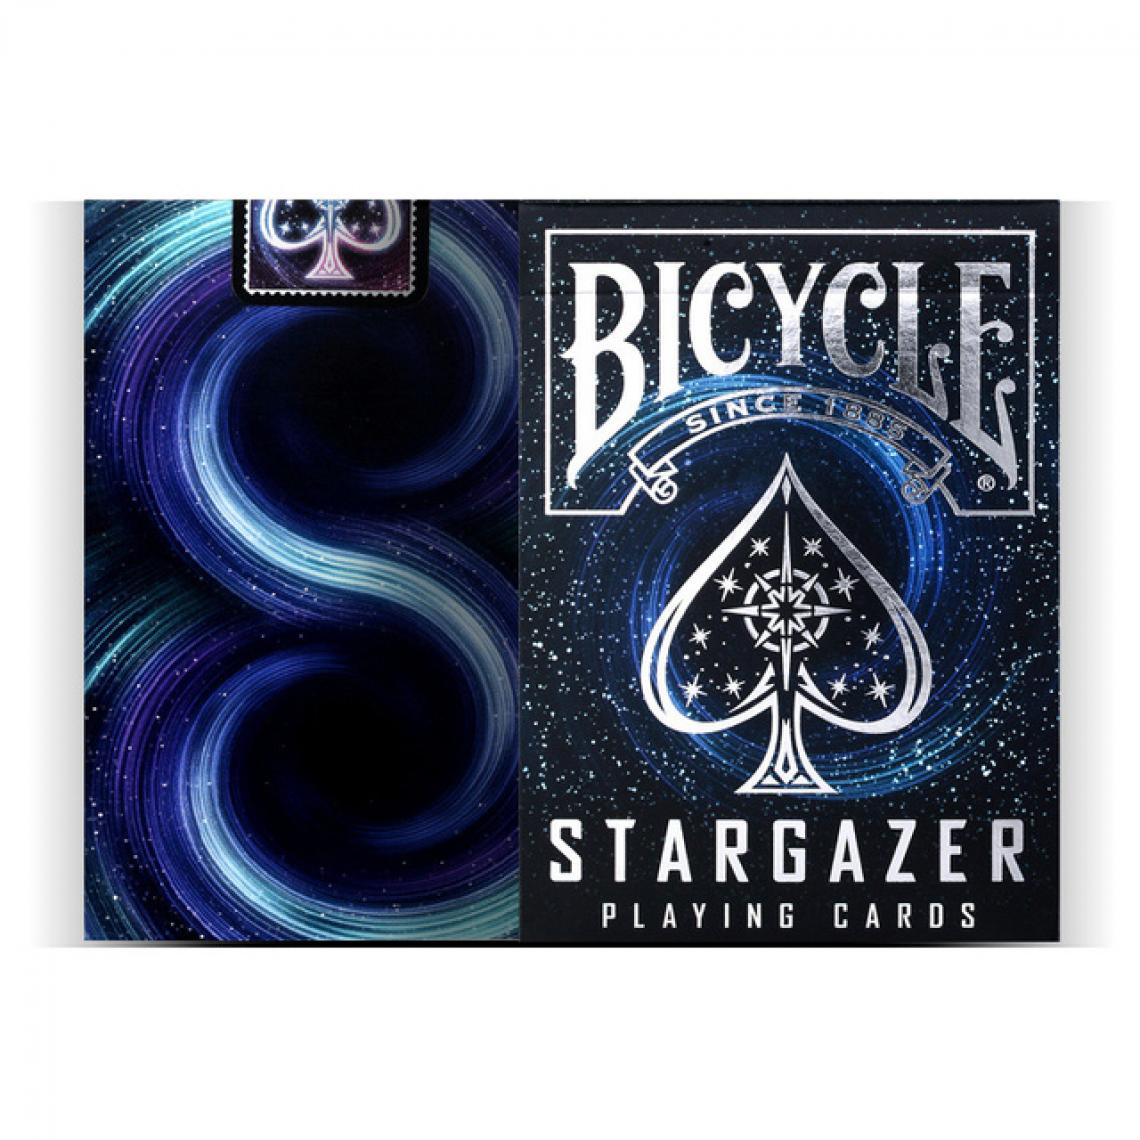 Universal - Vélo Star Top Poker Vide Galaxies Galaxies Deck Poker Taille Magique Jeu de cartes Magicien Magicien | Jeu de cartes(Bleu) - Jeux de cartes